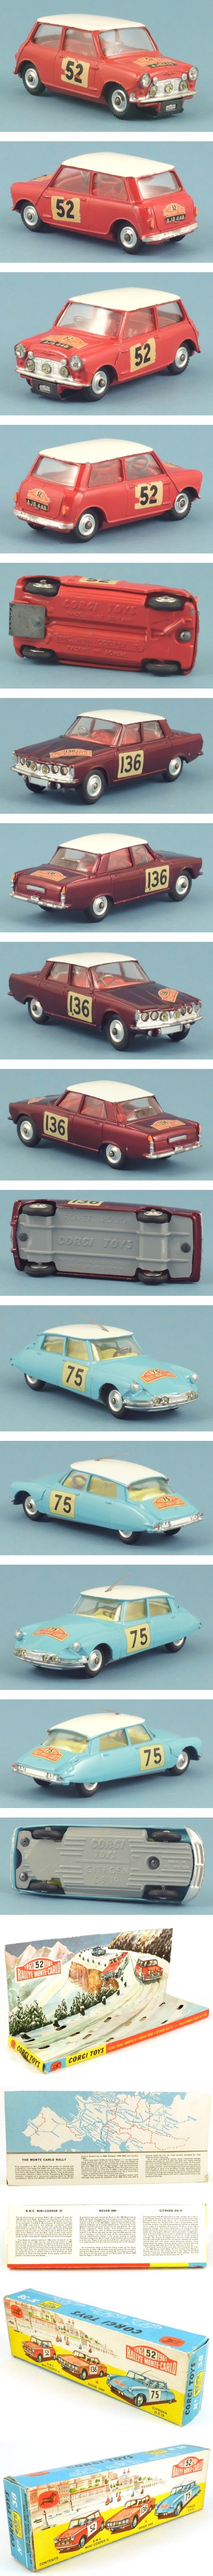 GS38 1965 Rallye Monte Carlo Gift Set